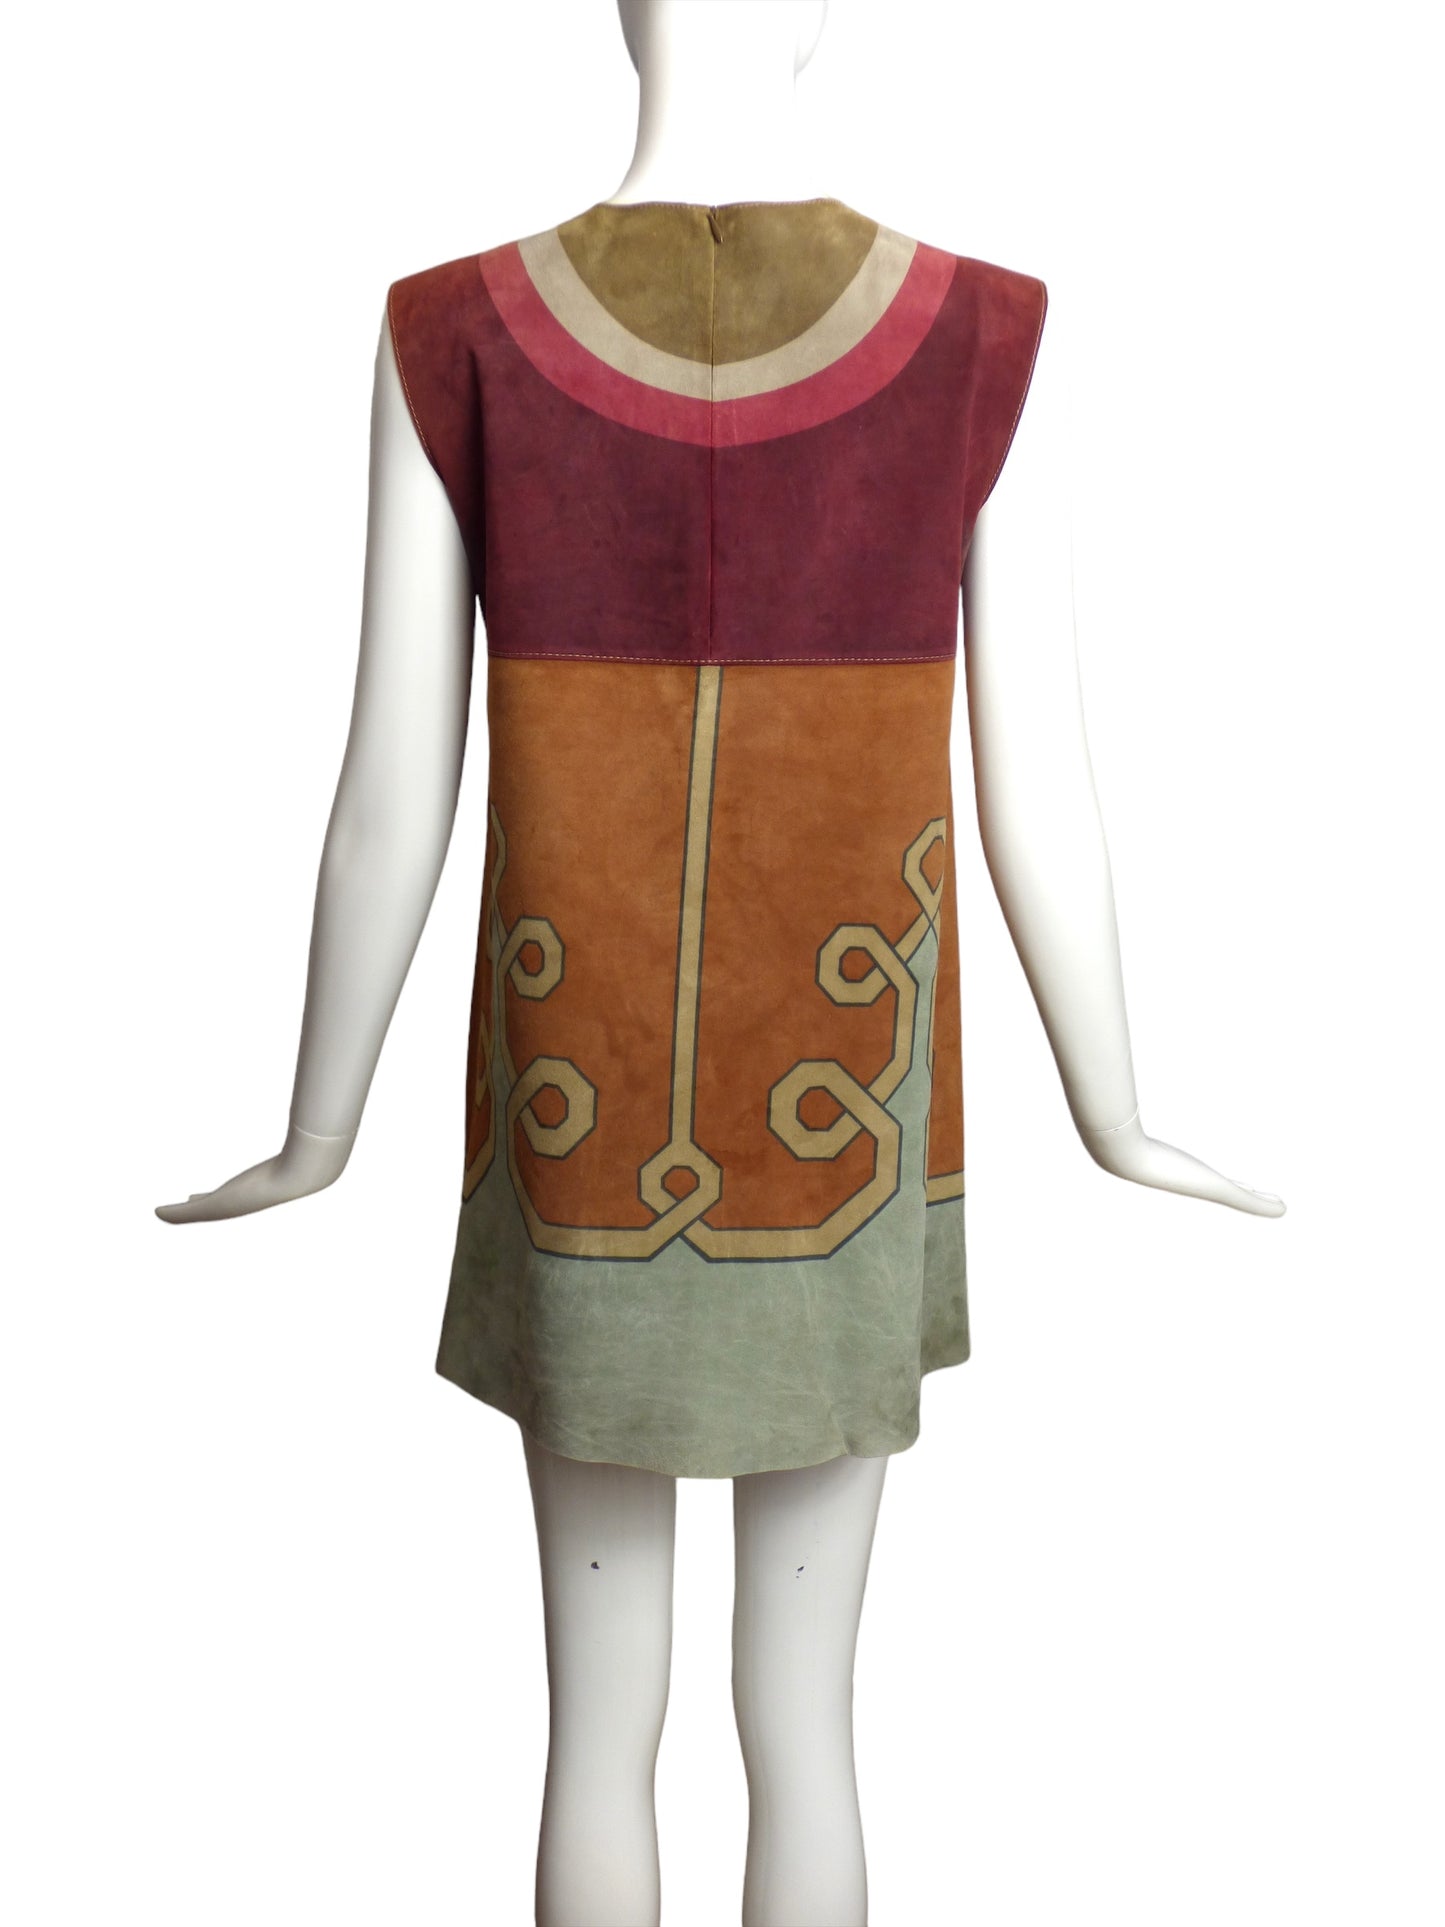 PRADA- AS IS Suede Print Tunic Dress, Size 6